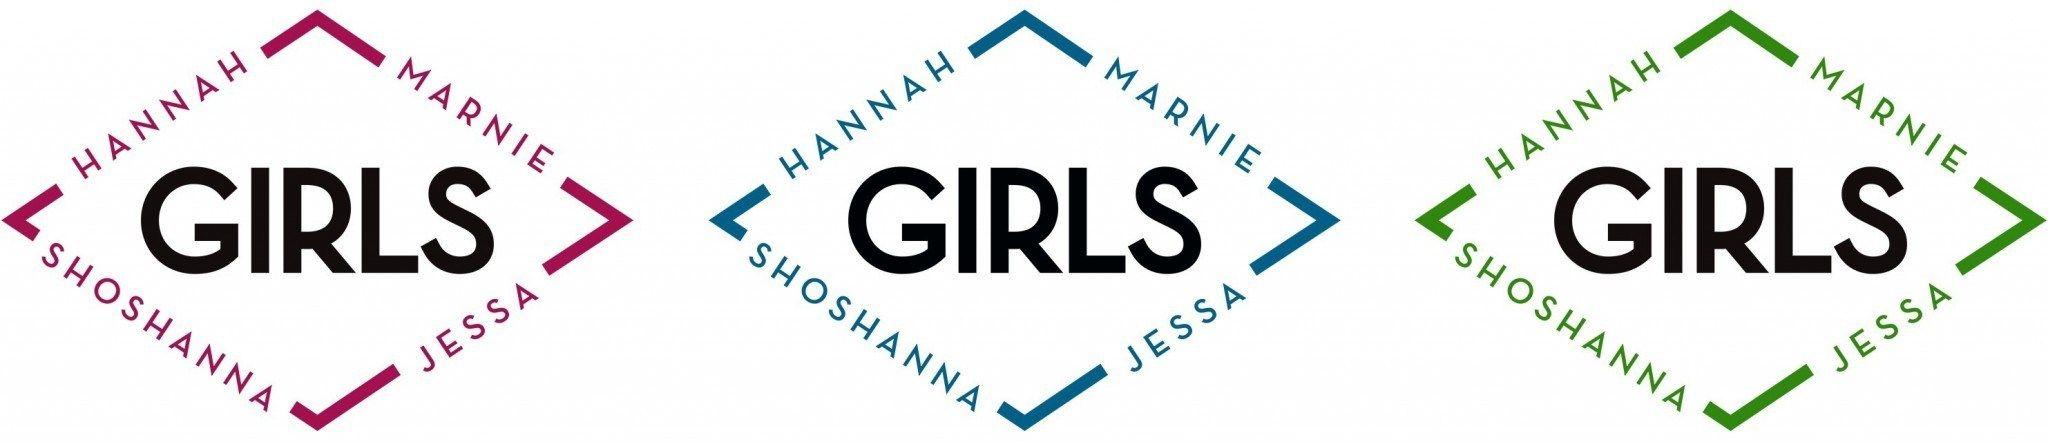 Merchandising Logo - GIRLS Merchandising Logo | CHIPS